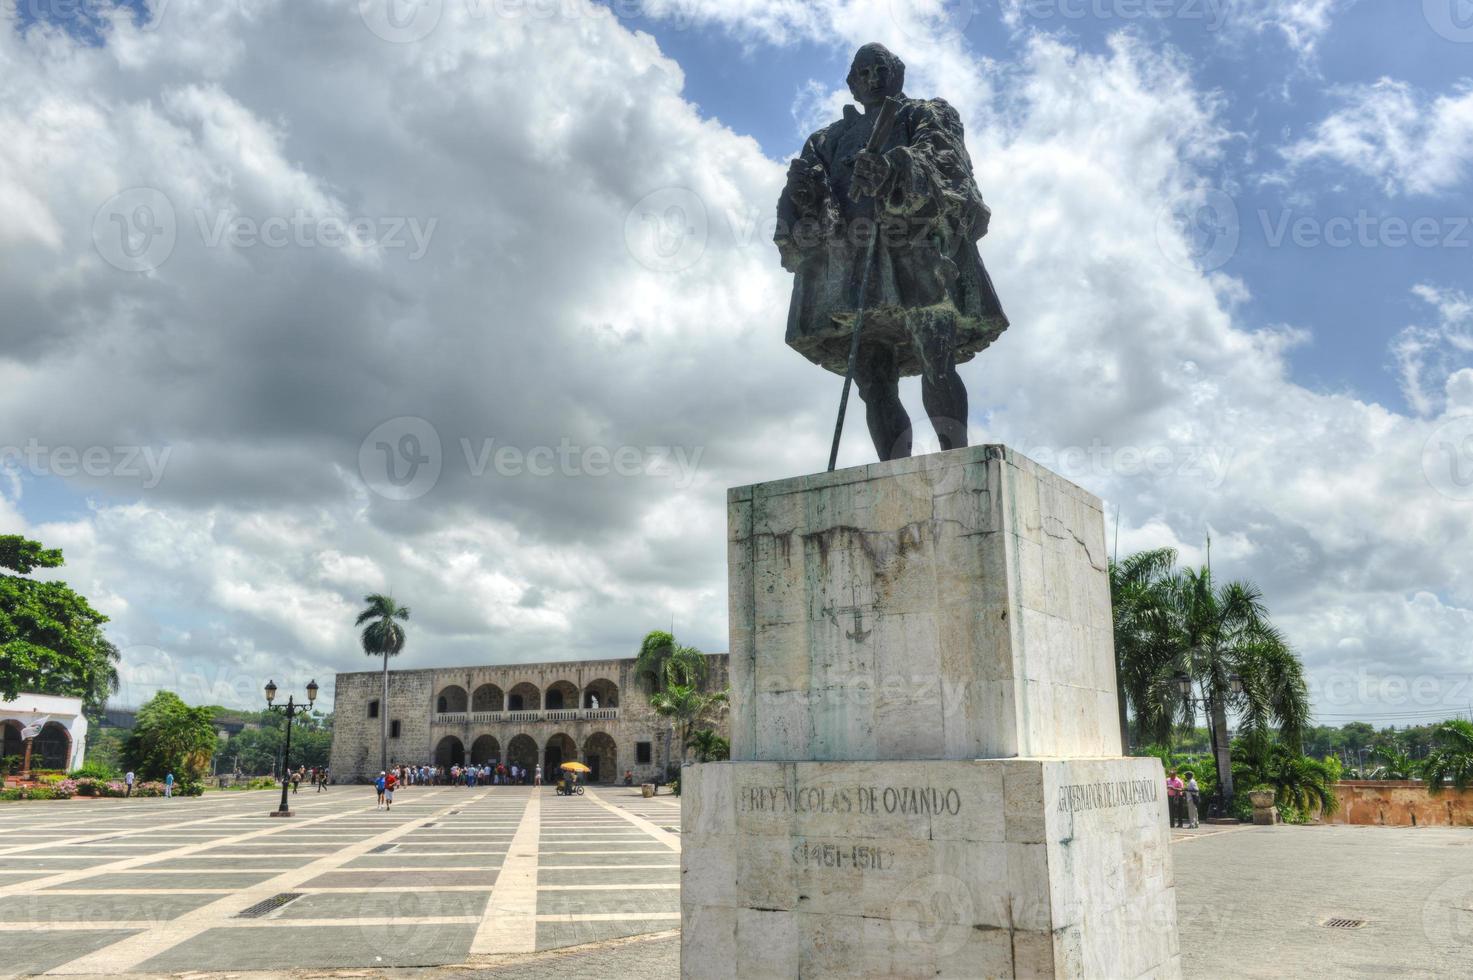 plaza de españa, santo domingo, republica dominicana foto